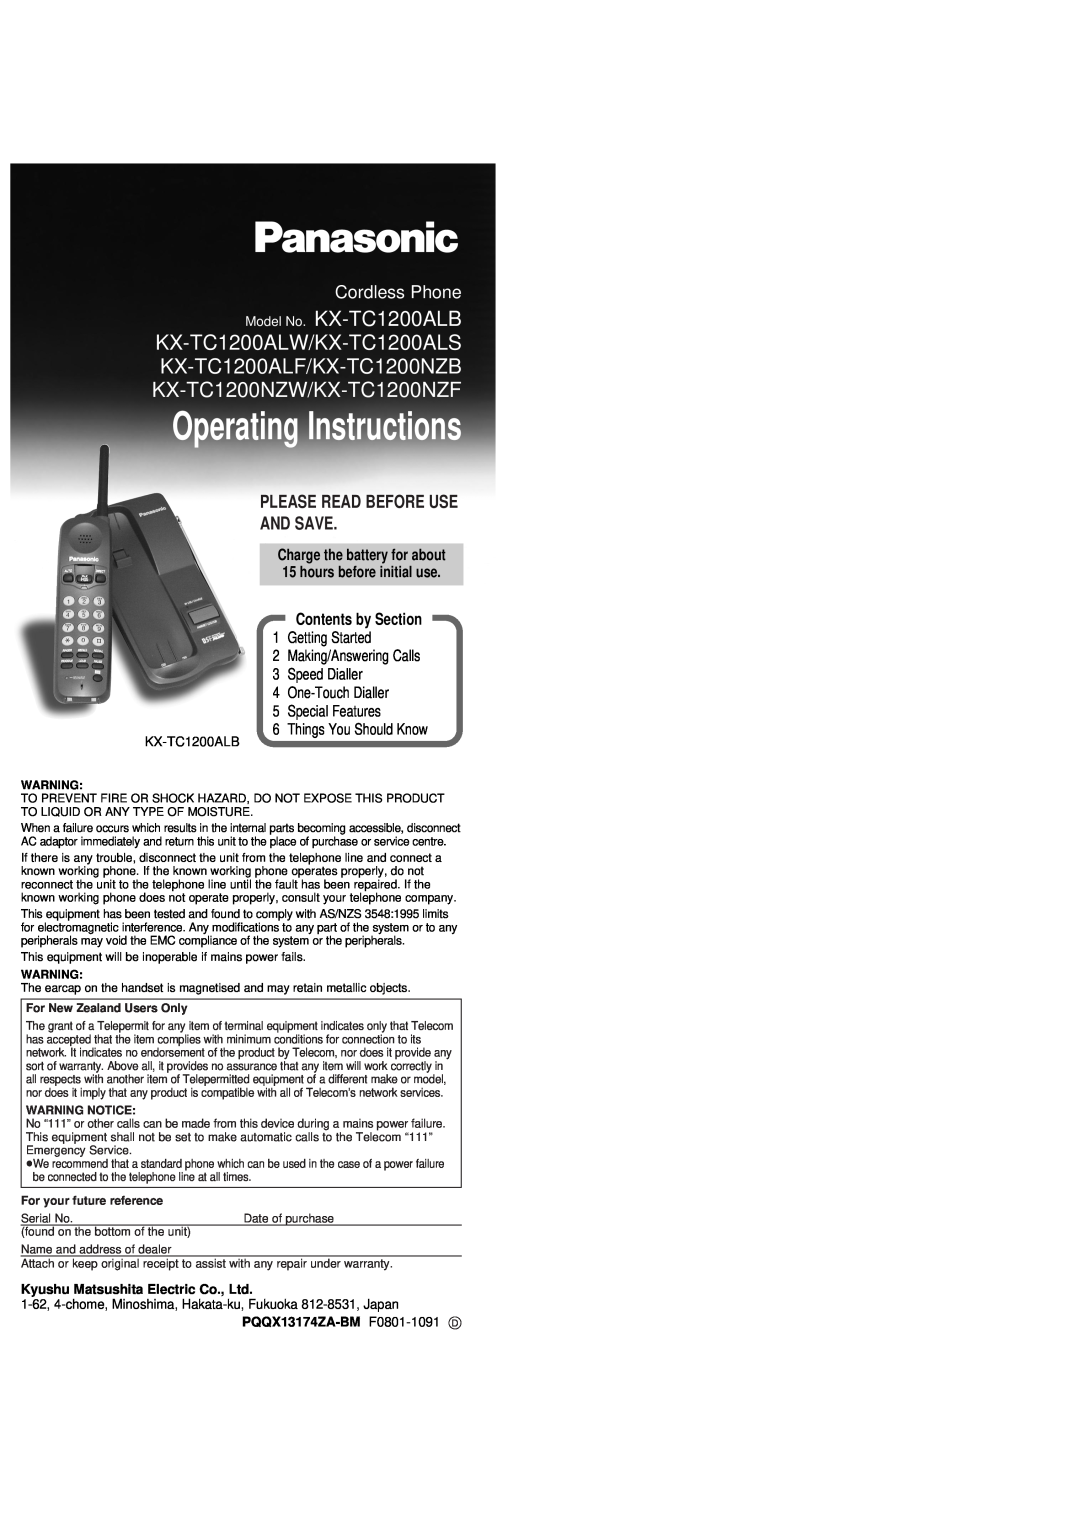 Panasonic KX-TC1200NZW warranty Please Read Before Use And Save, PQQX13174ZA-BM F0801-1091 D, Operating Instructions 